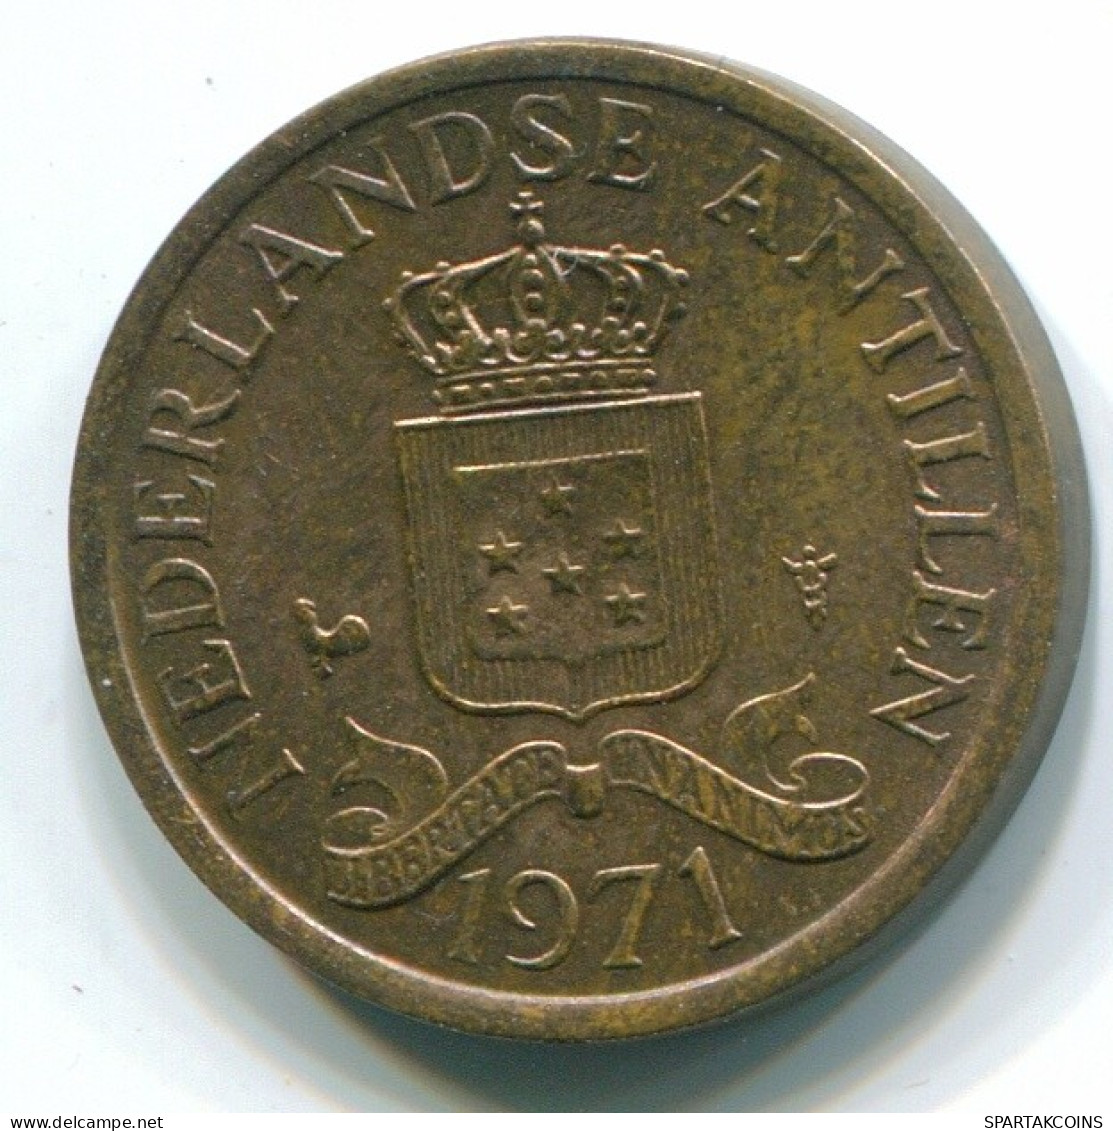 1 CENT 1971 NETHERLANDS ANTILLES Bronze Colonial Coin #S10627.U.A - Netherlands Antilles